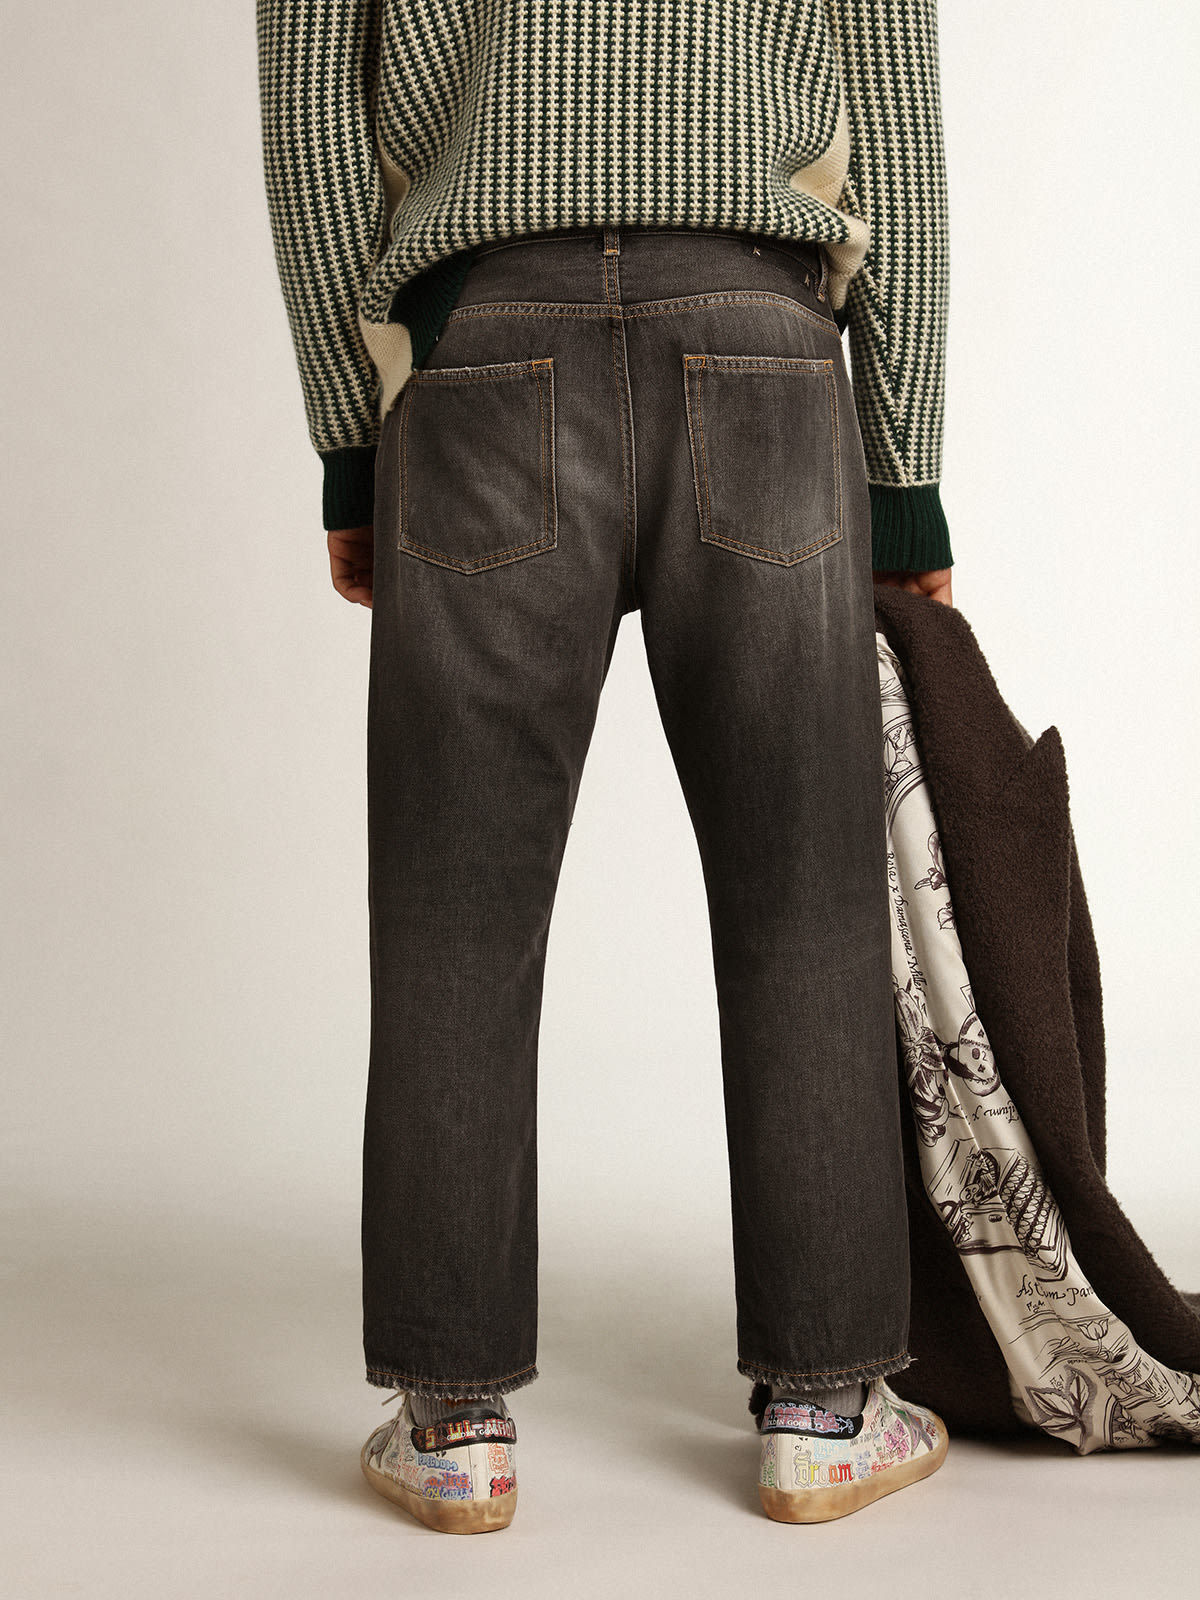 Golden Goose - Jeans neri Cory Collezione Journey dall'effetto stonewashed in 